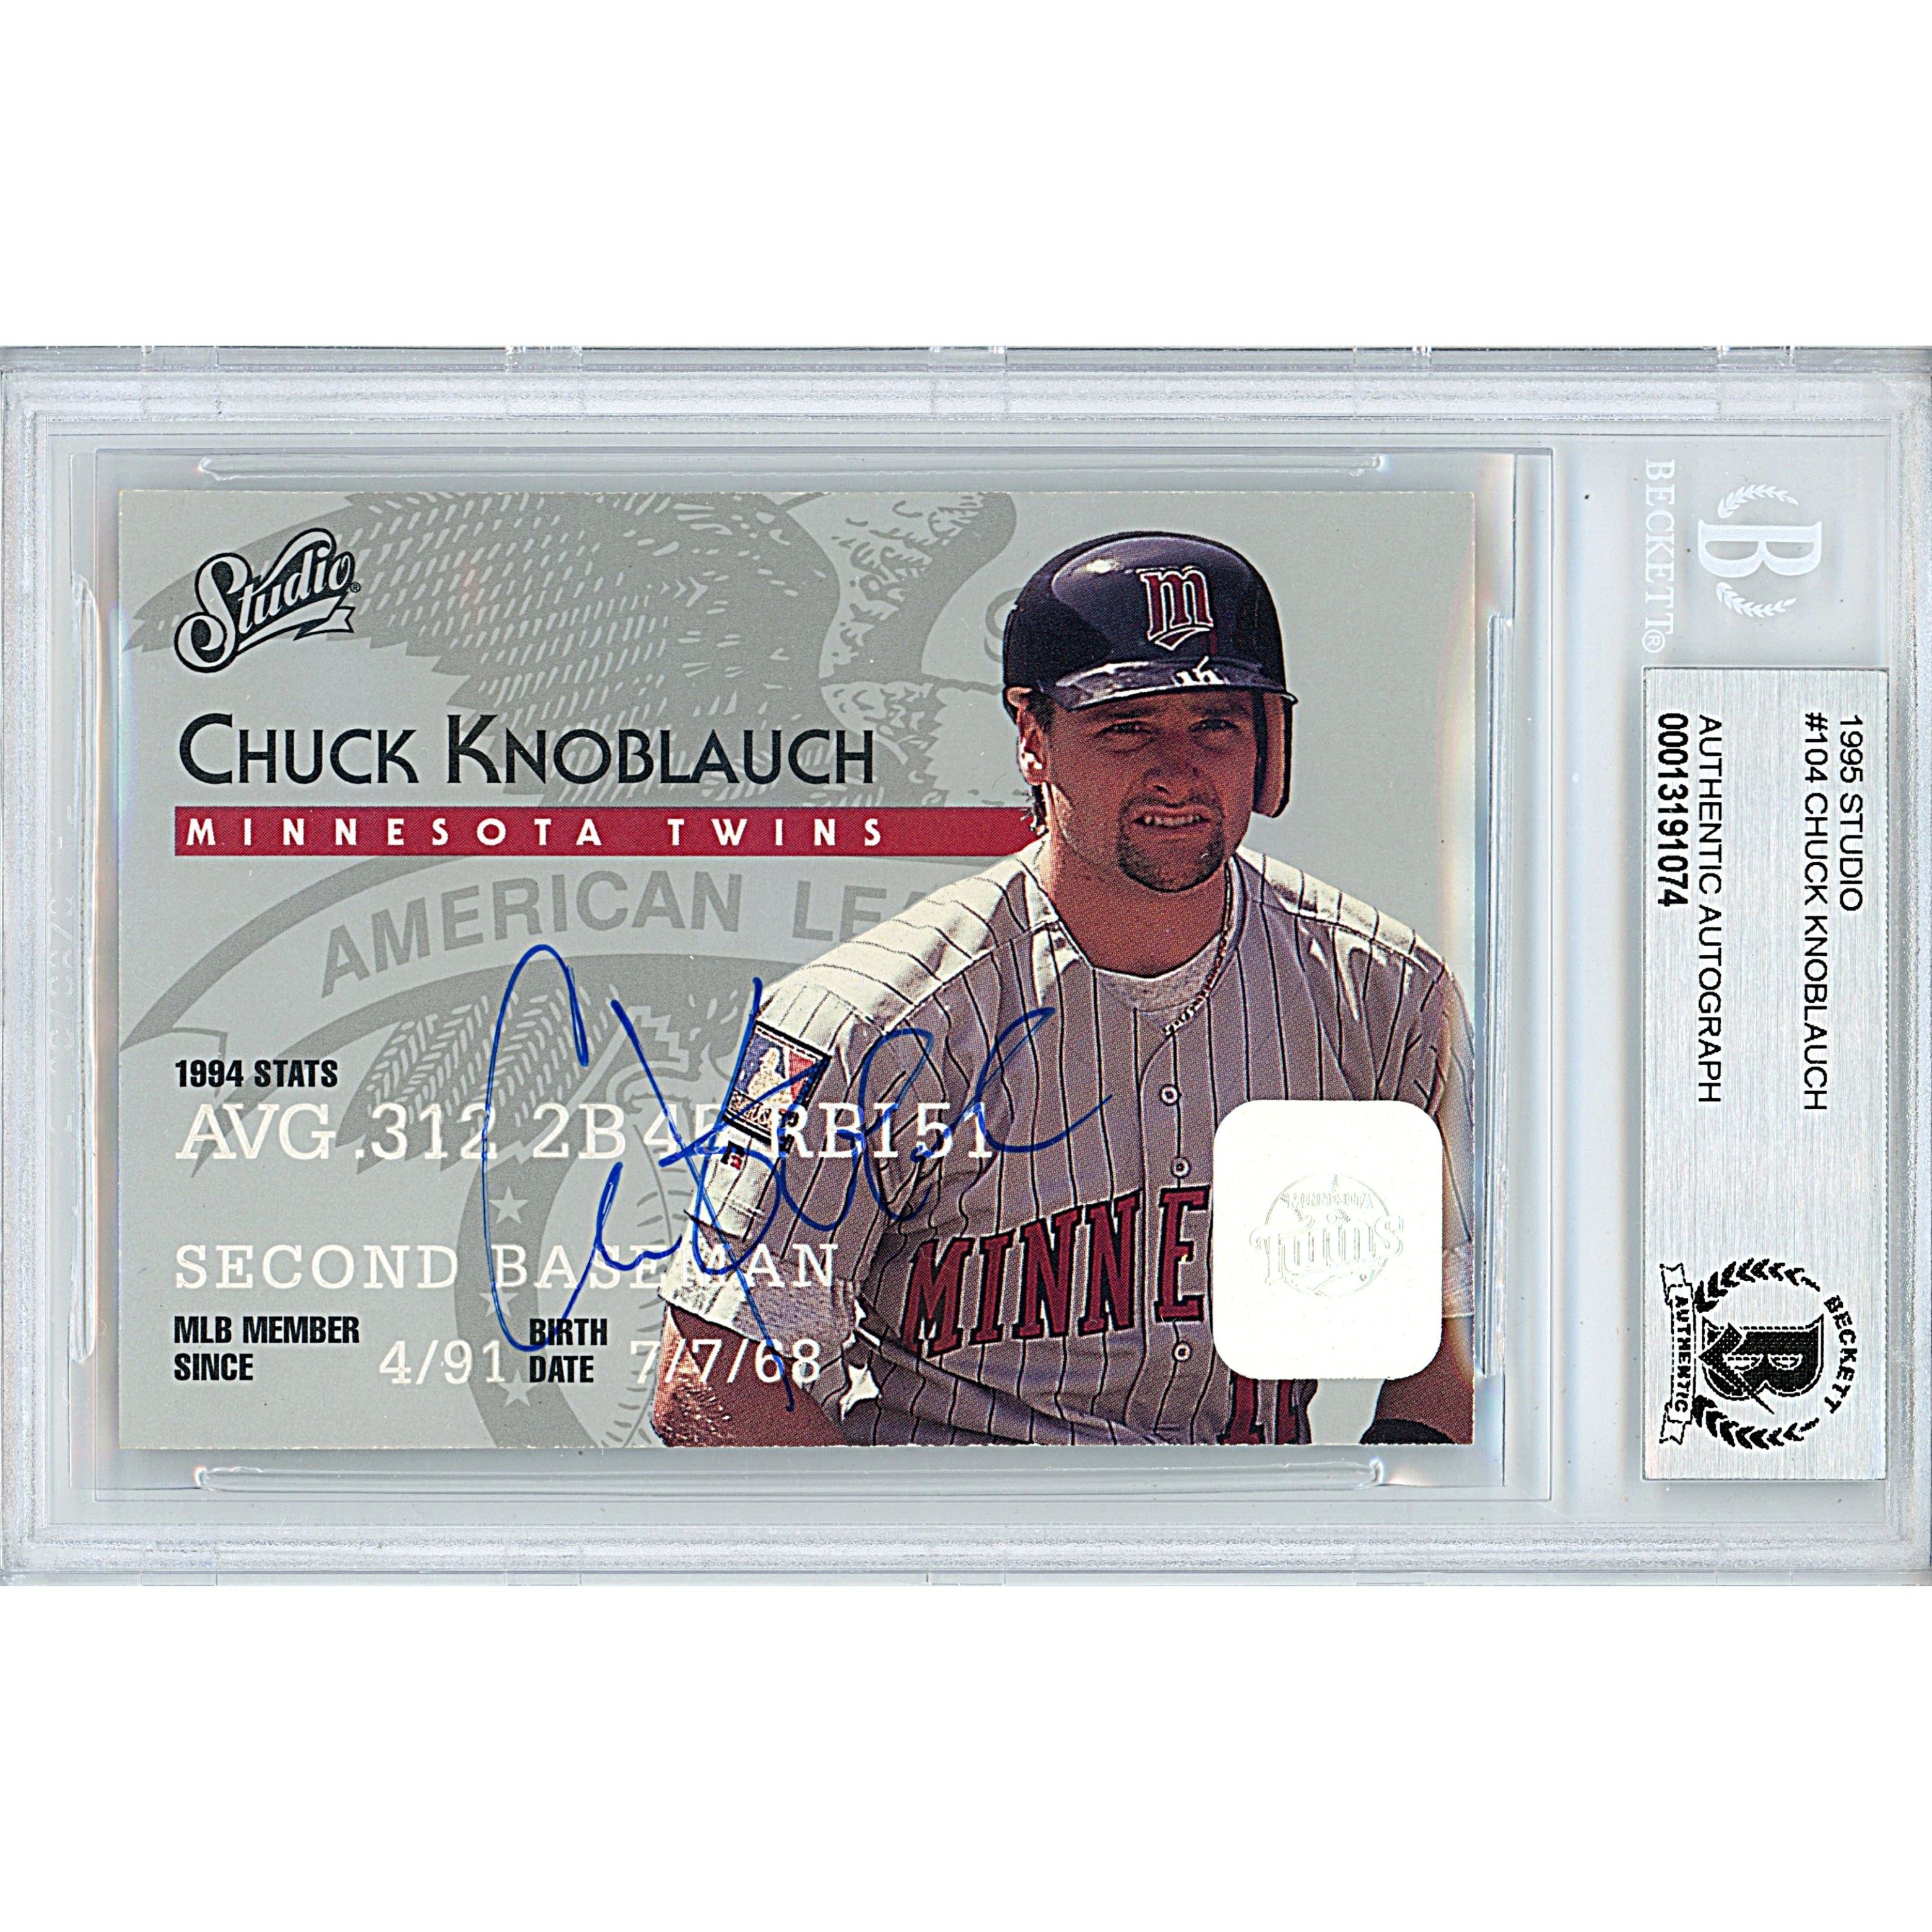 Chuck Knoblauch signed MLB baseball